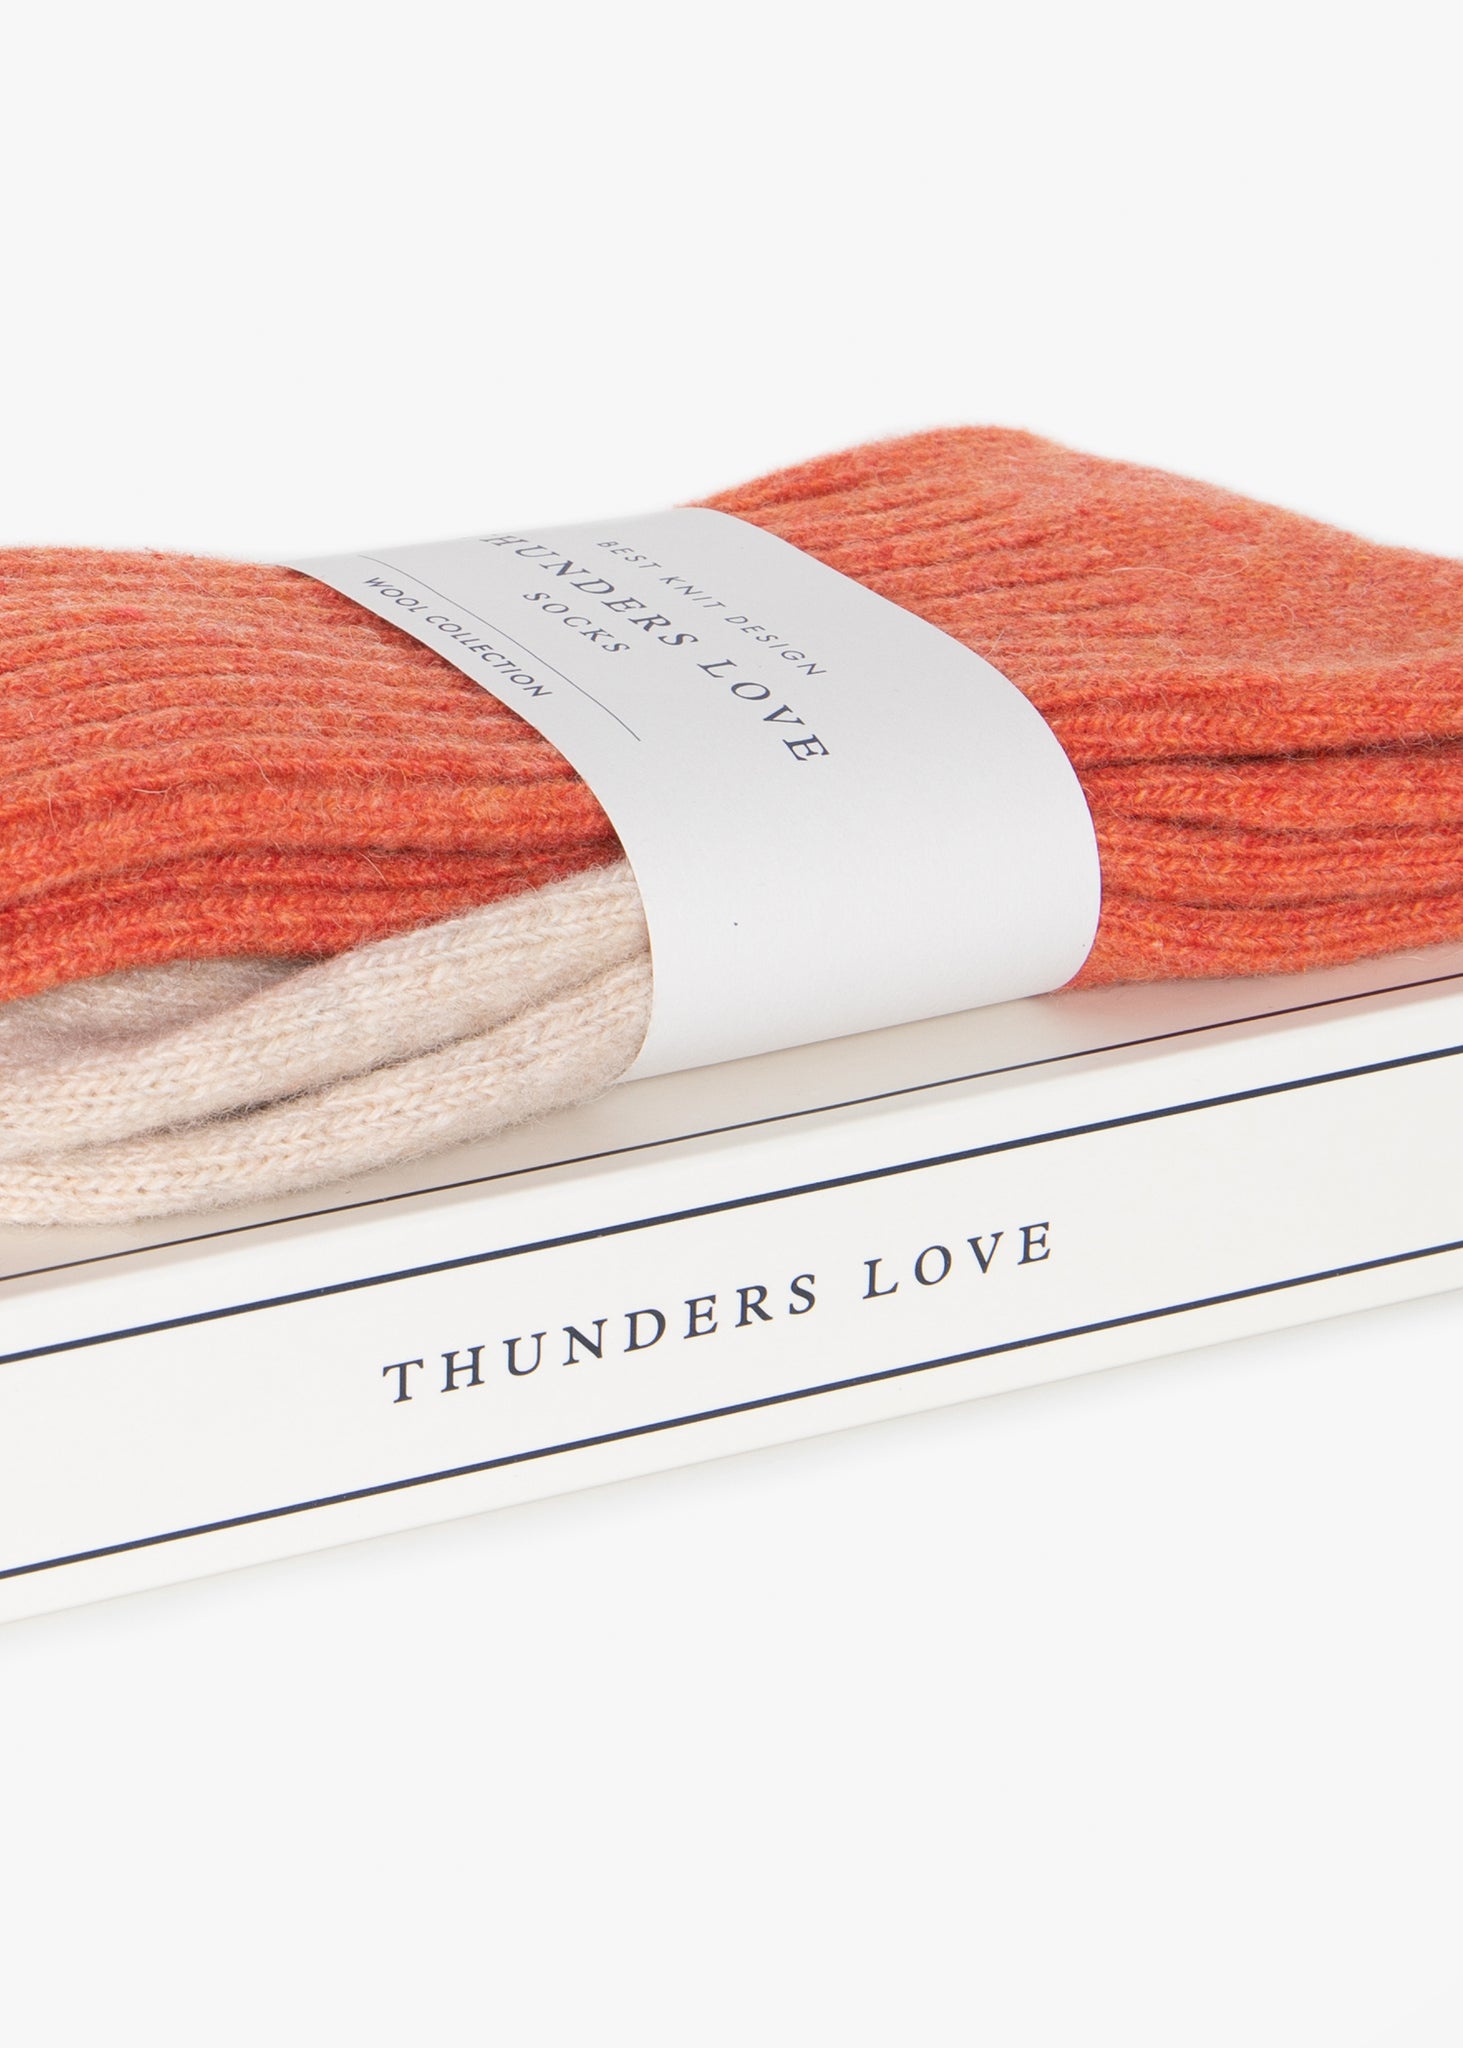 Thunders Love Wool Orange Socks